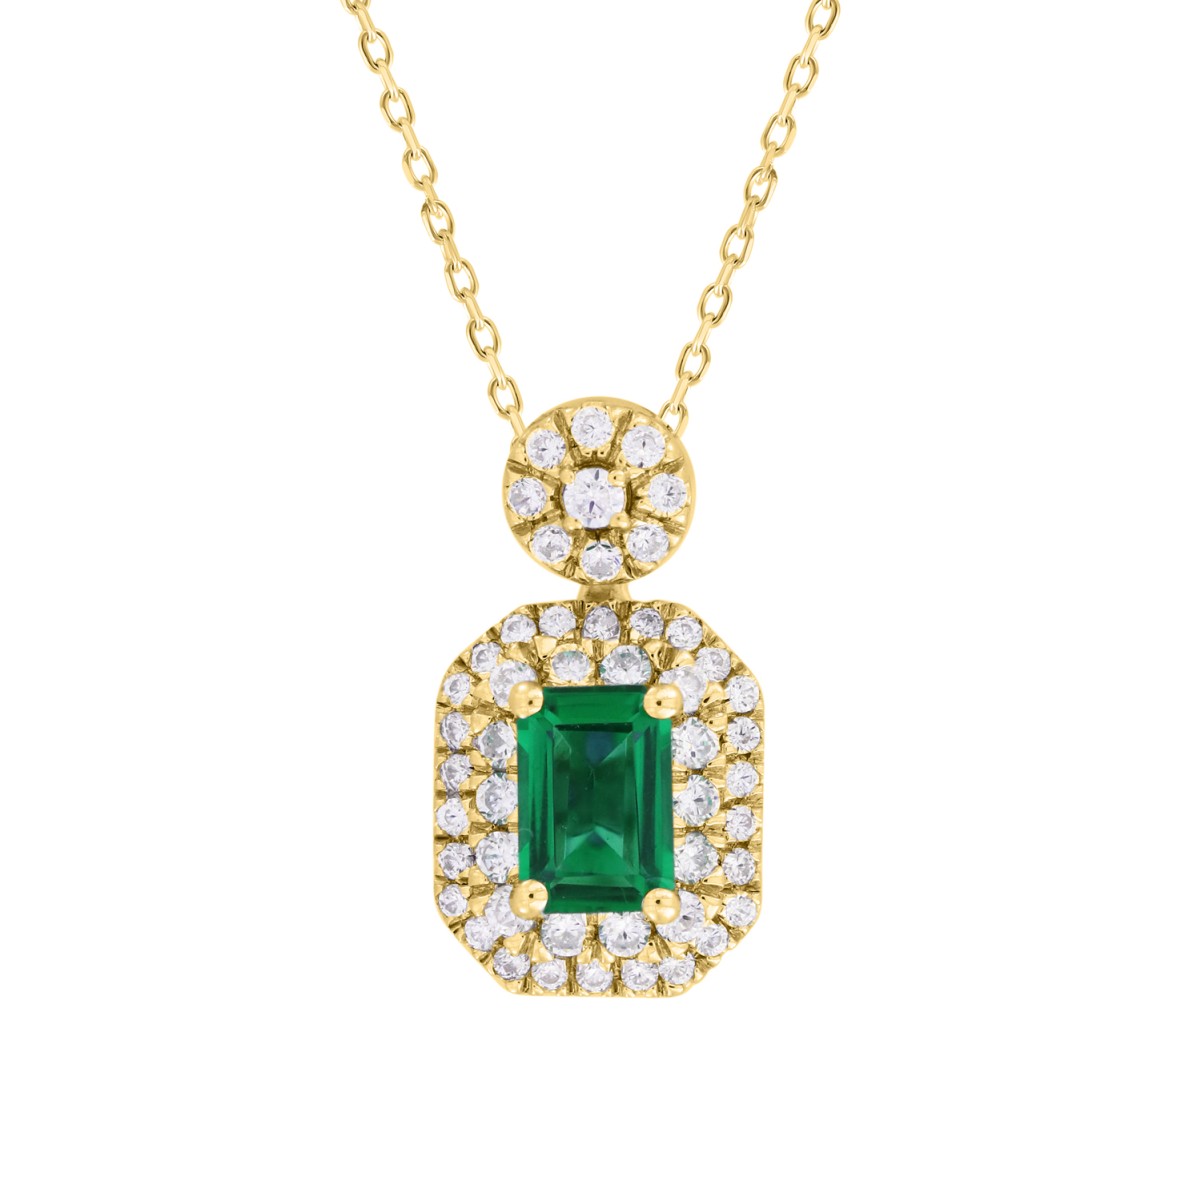 14K YELLOW GOLD 7/8CT ROUND/EMERALD DIAMOND LADIES PENDANT WITH CHAIN(COLOR STONE GREEN EMERALD DIAMOND 1/2CT)